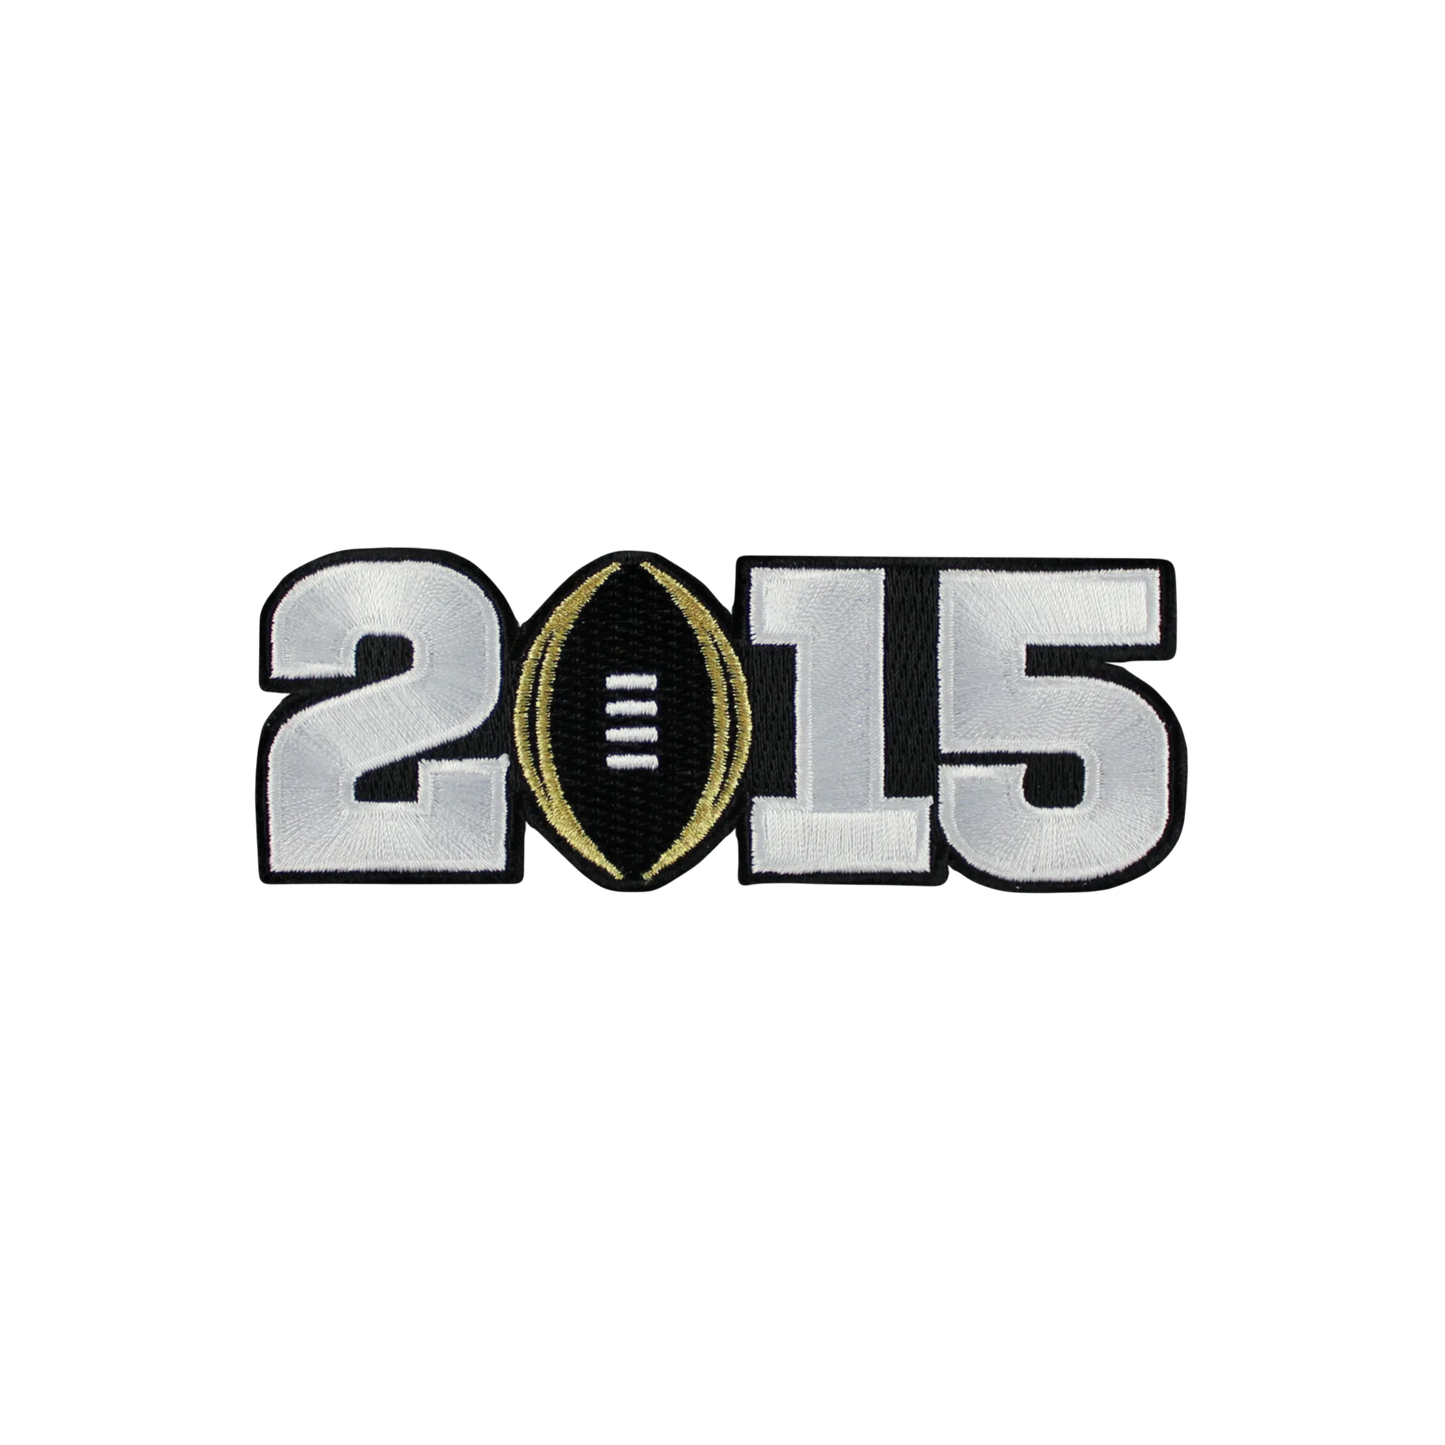 Ohio State Buckeyes Ezekiel Elliott Nike 2015 NCAA College Football National Championship Jersey